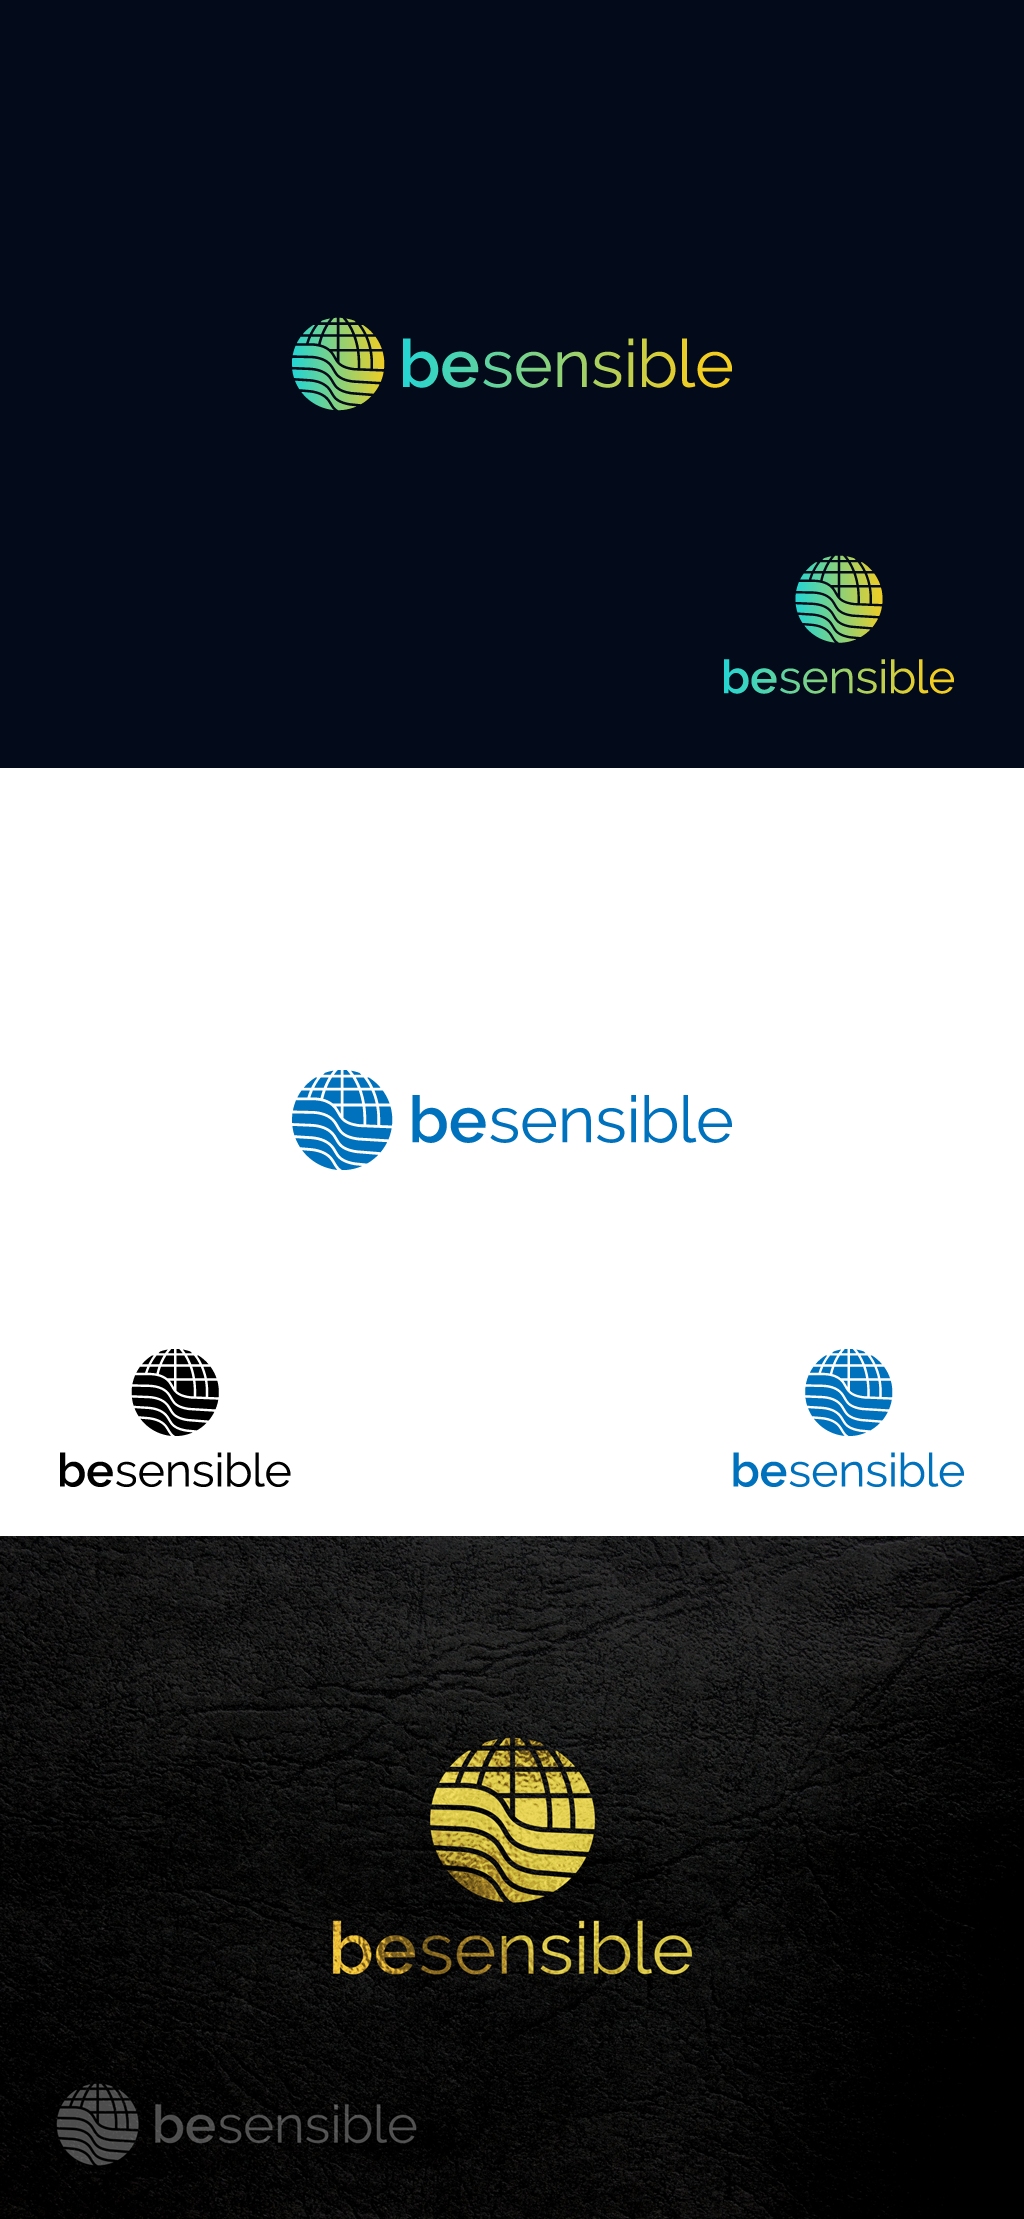 besensible_logo.png